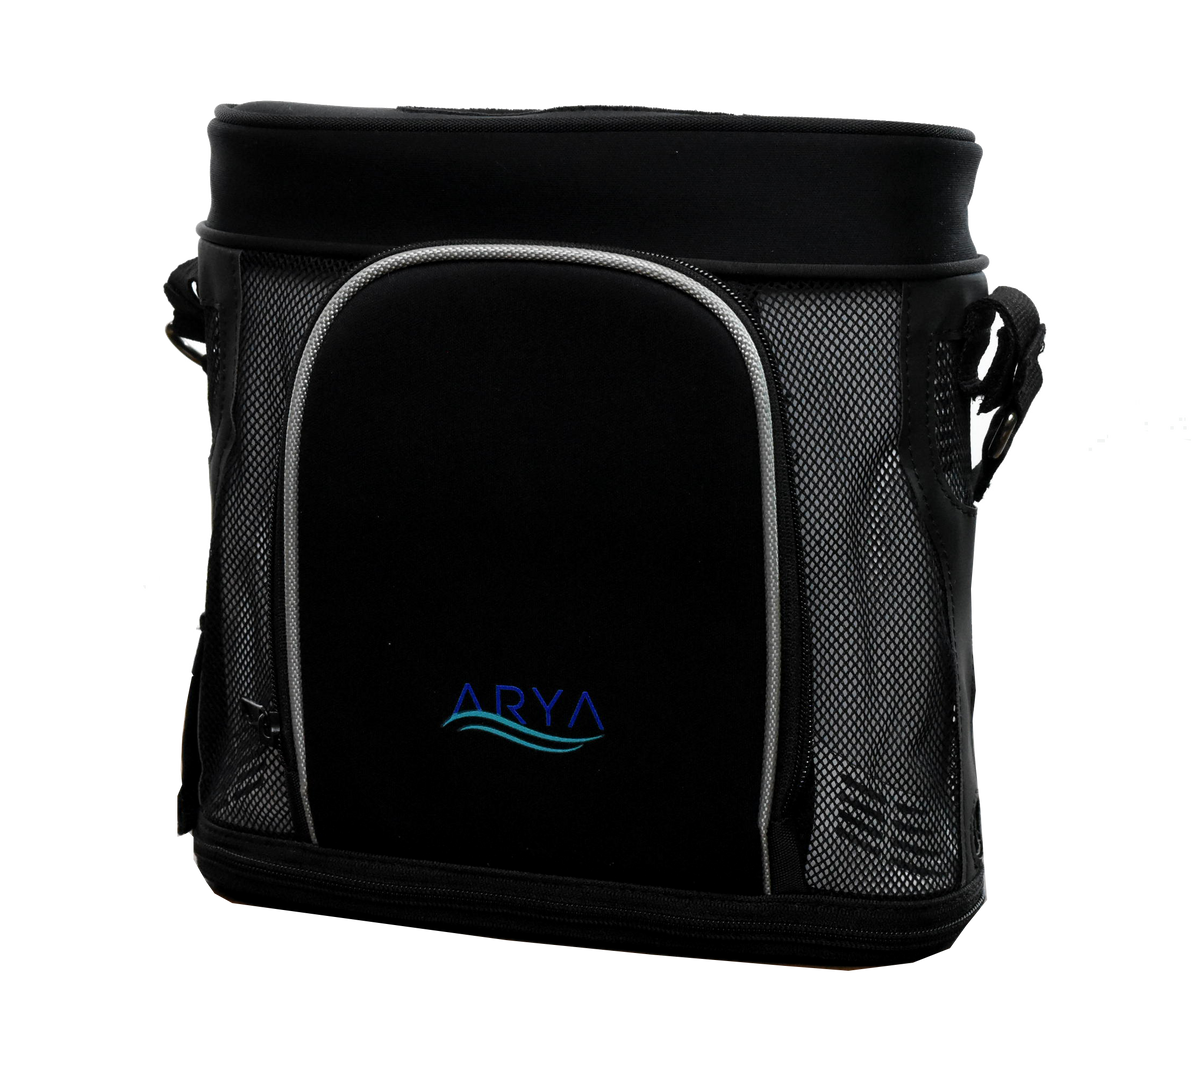 ARYA P5 Portable Oxygen Concentrator